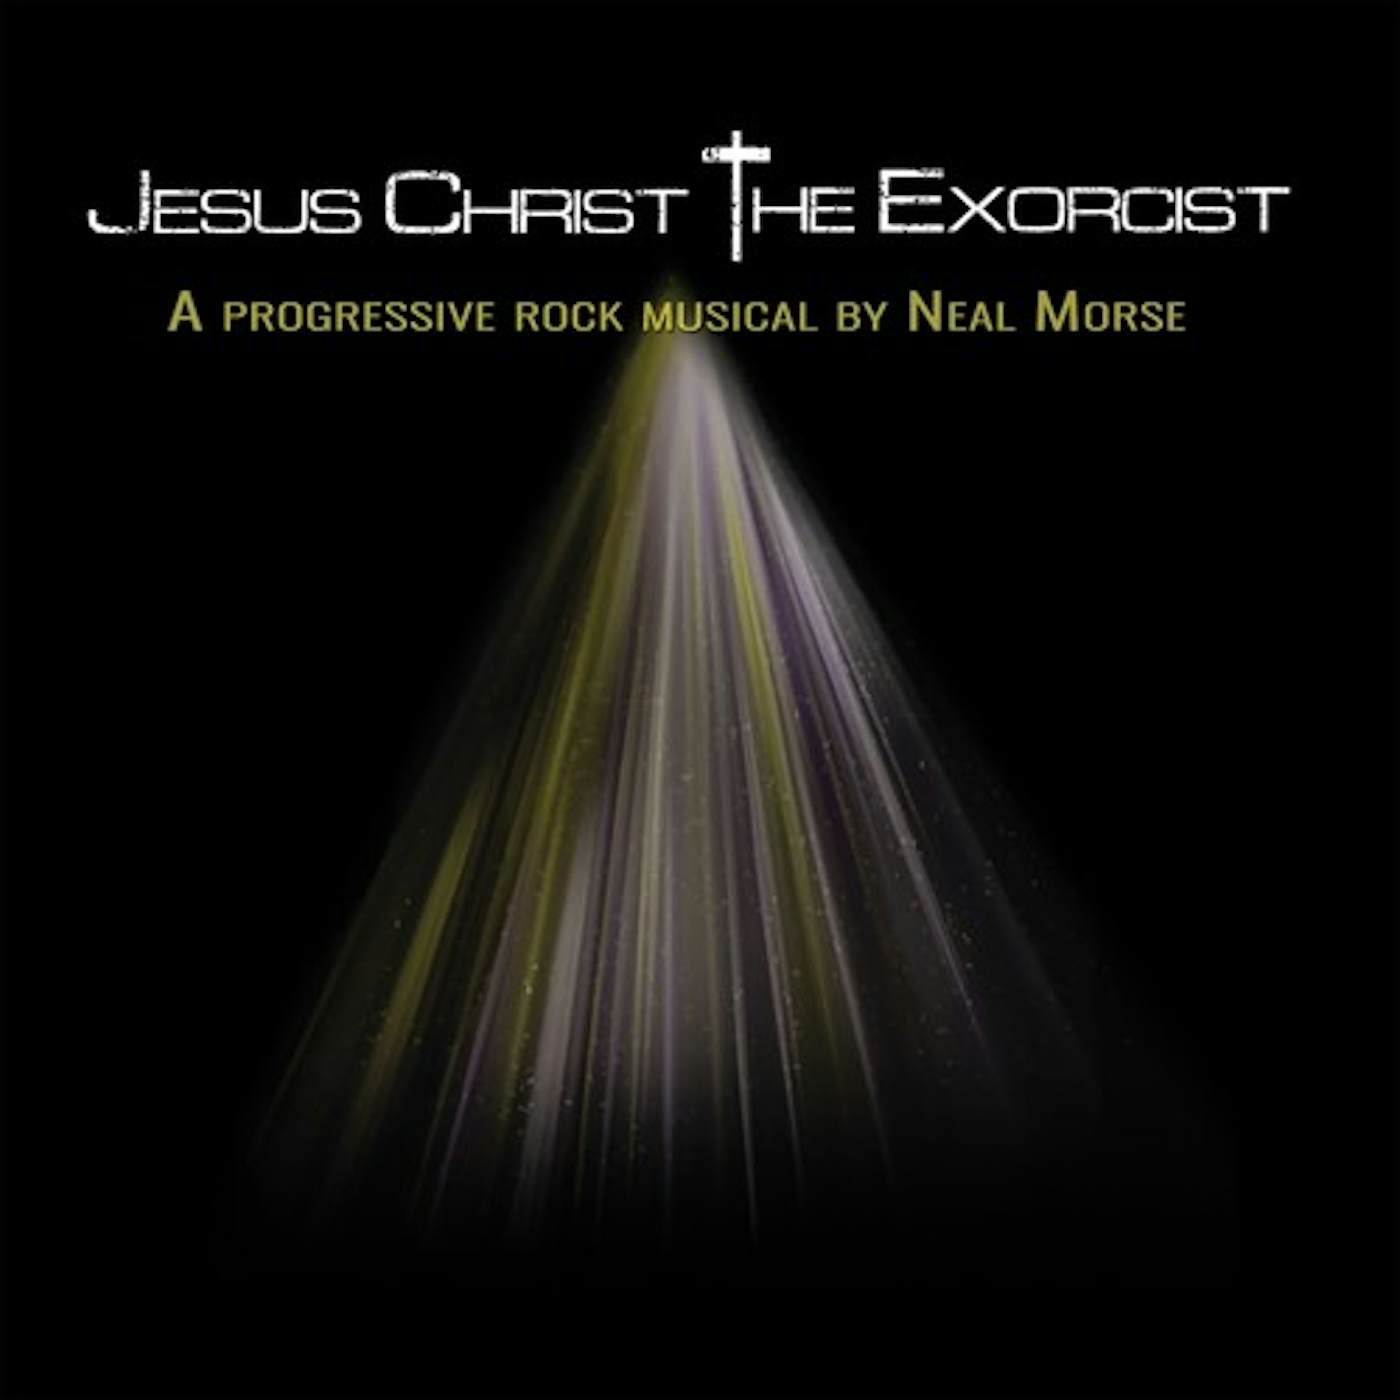 Neal Morse Jesus Christ the Exorcist Vinyl Record